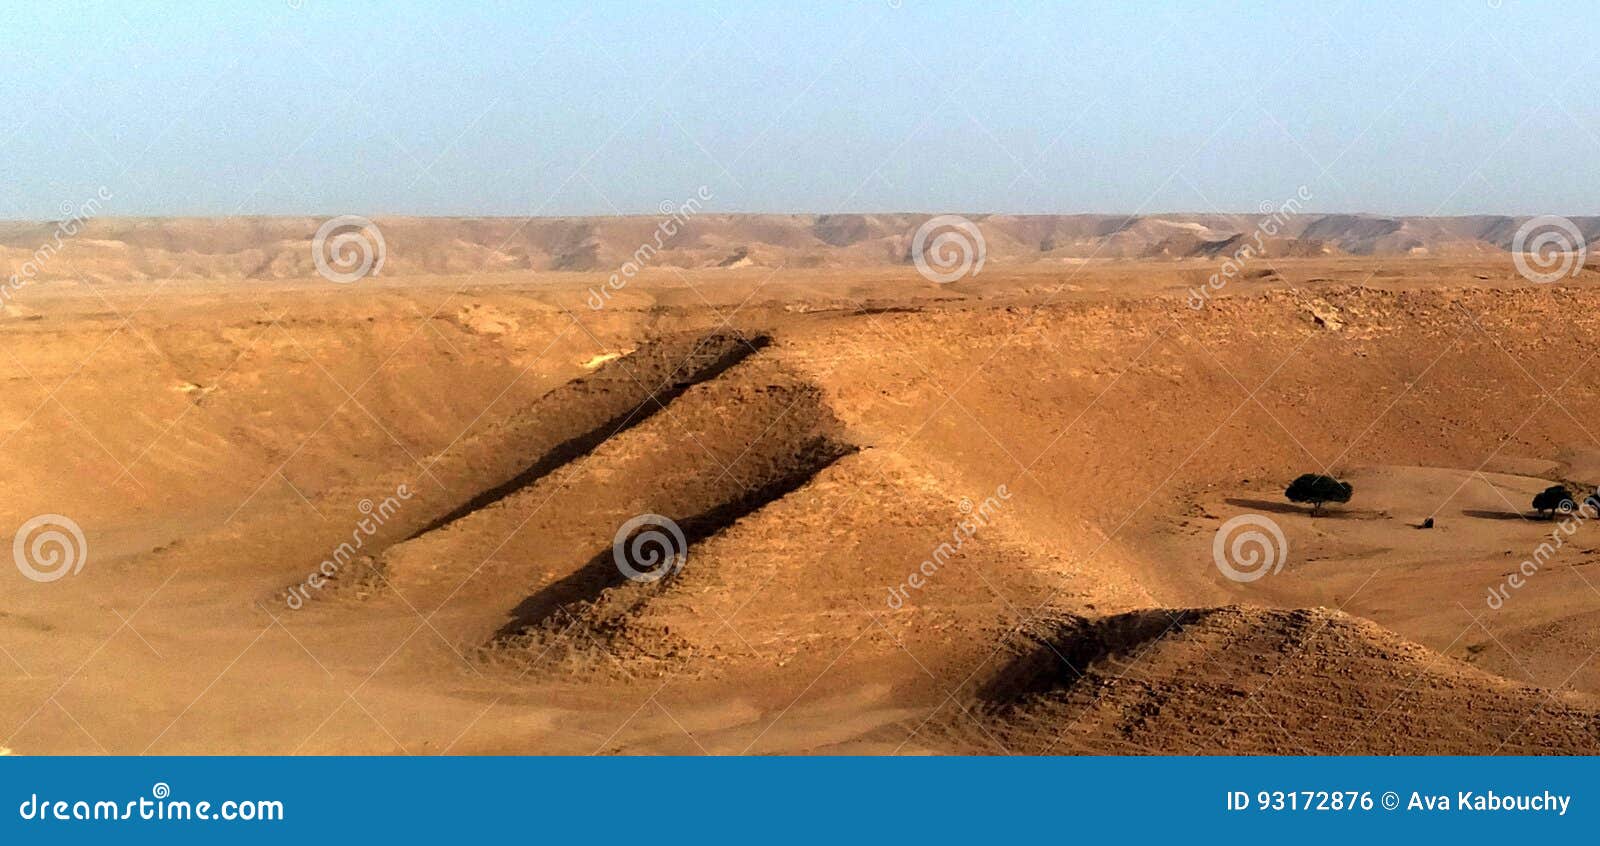 pyramid-d hills in the desert outside riyadh, kingdom of saui arabia